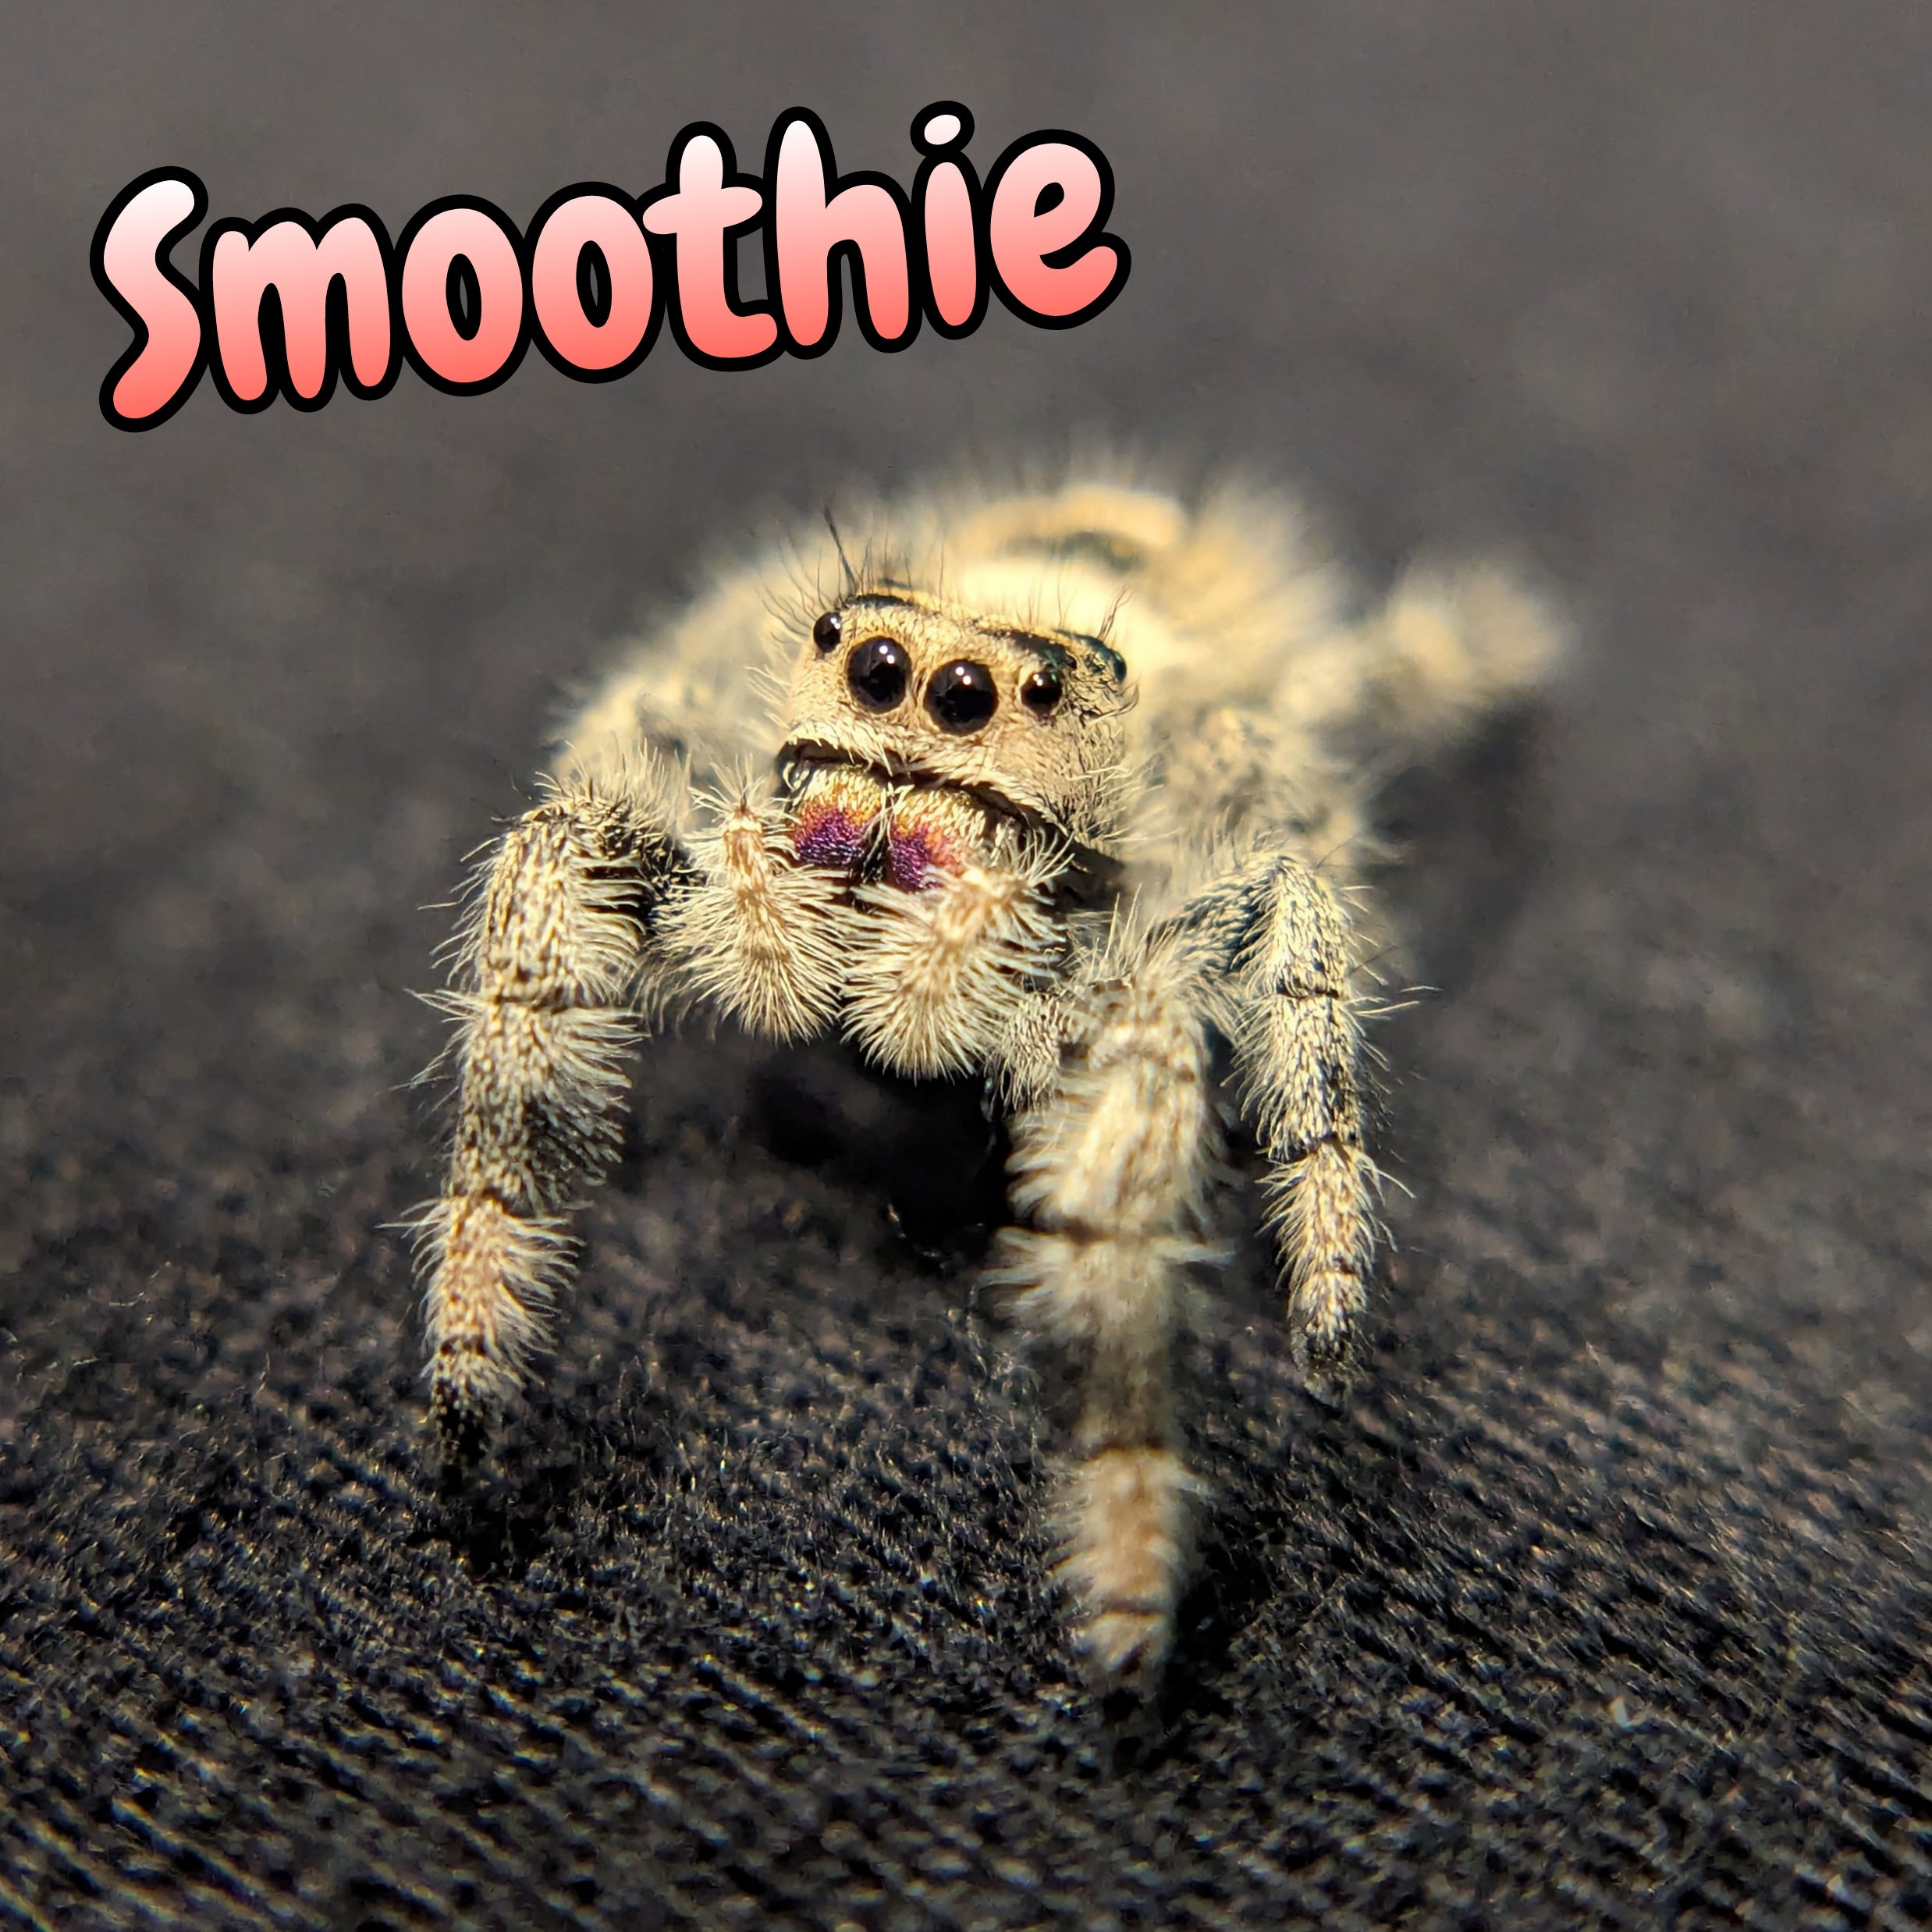 Regal Jumping Spider "Smoothie"